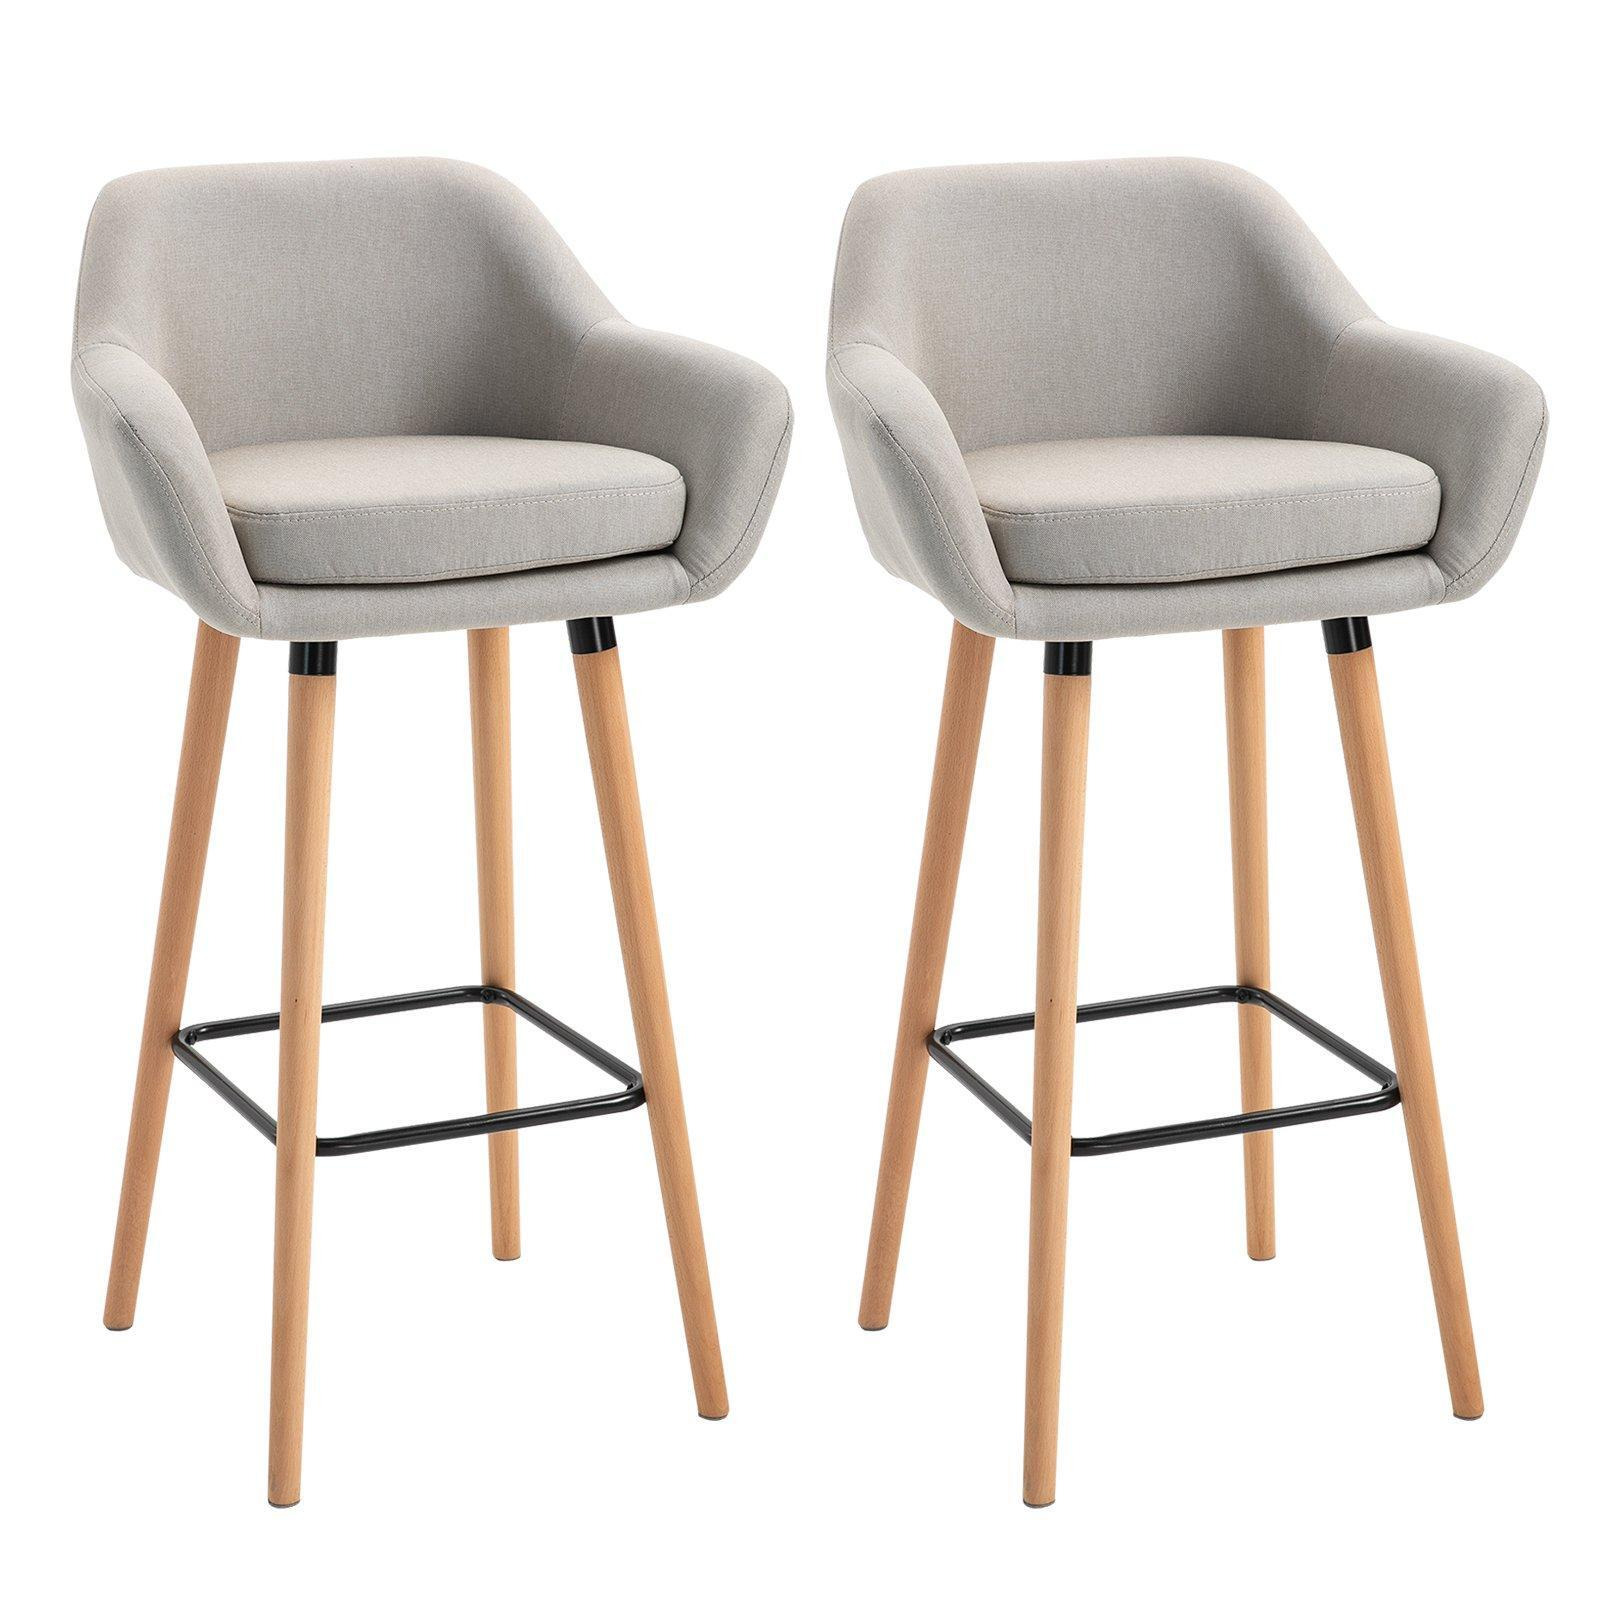 2 PCs Modern Upholstered Fabric Bucket Seat Bar Stools Wood Legs - image 1